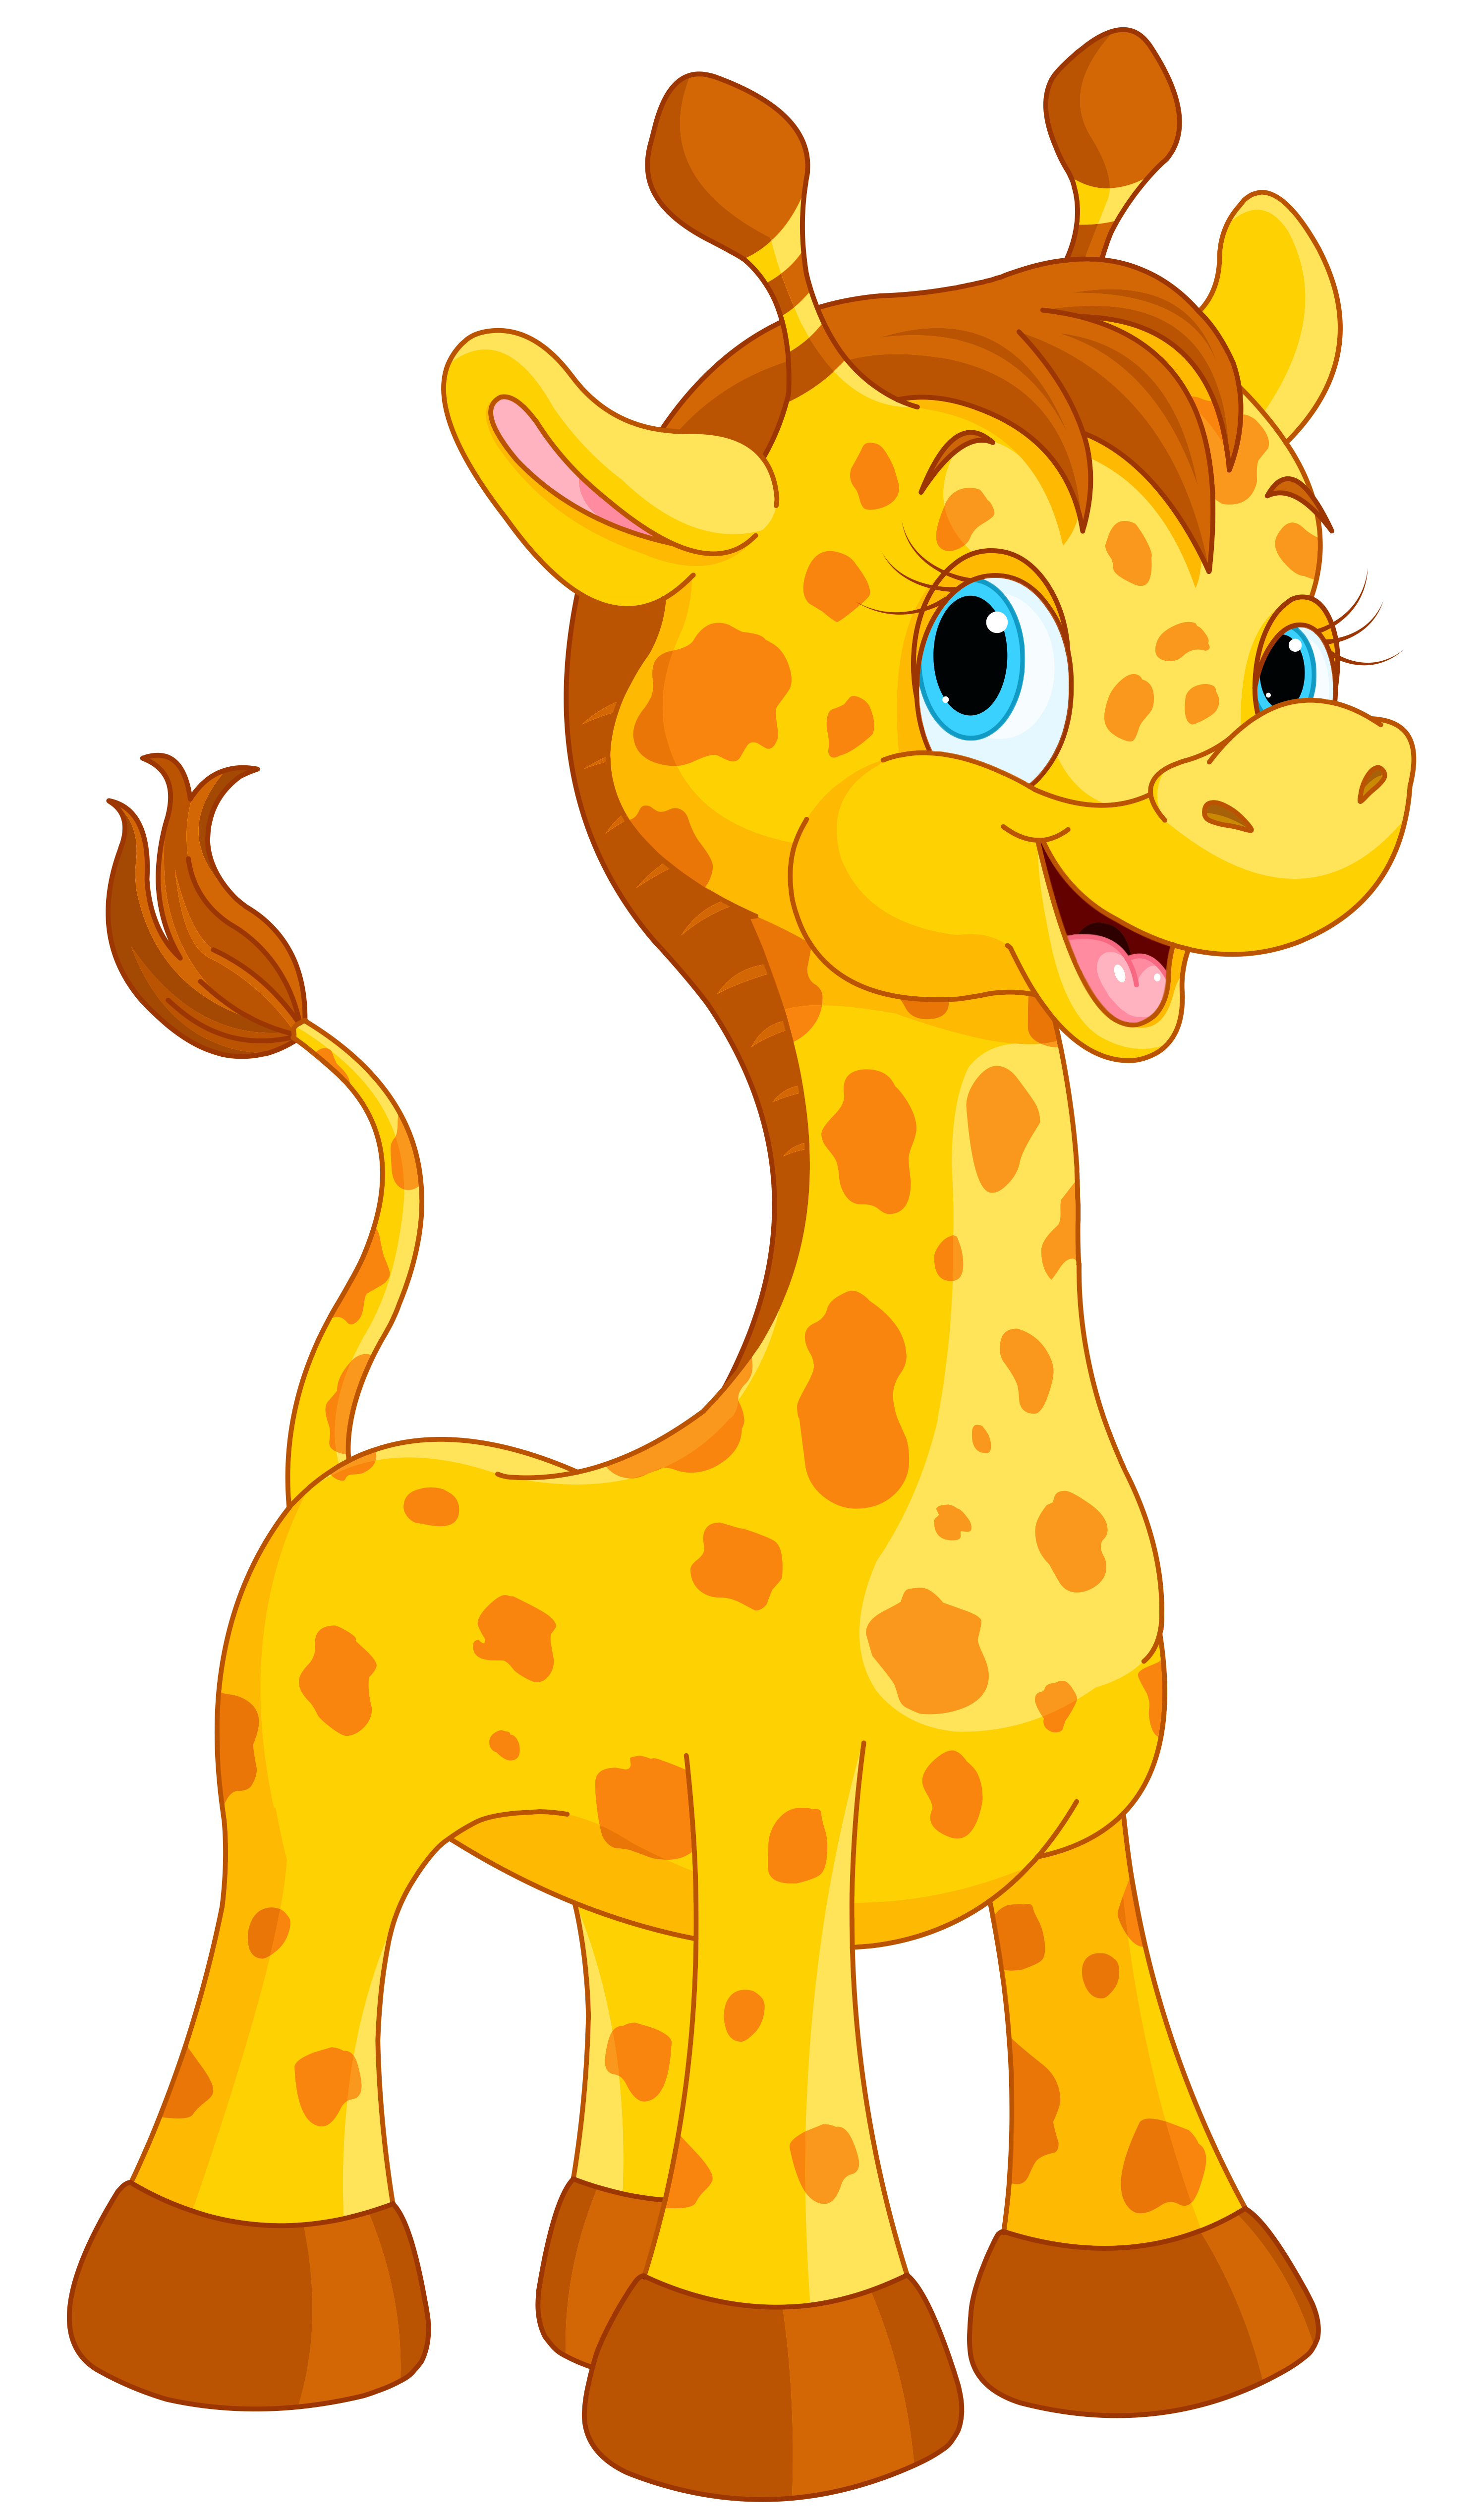 Cute clipart cheetah. Giraffe cartoon png image